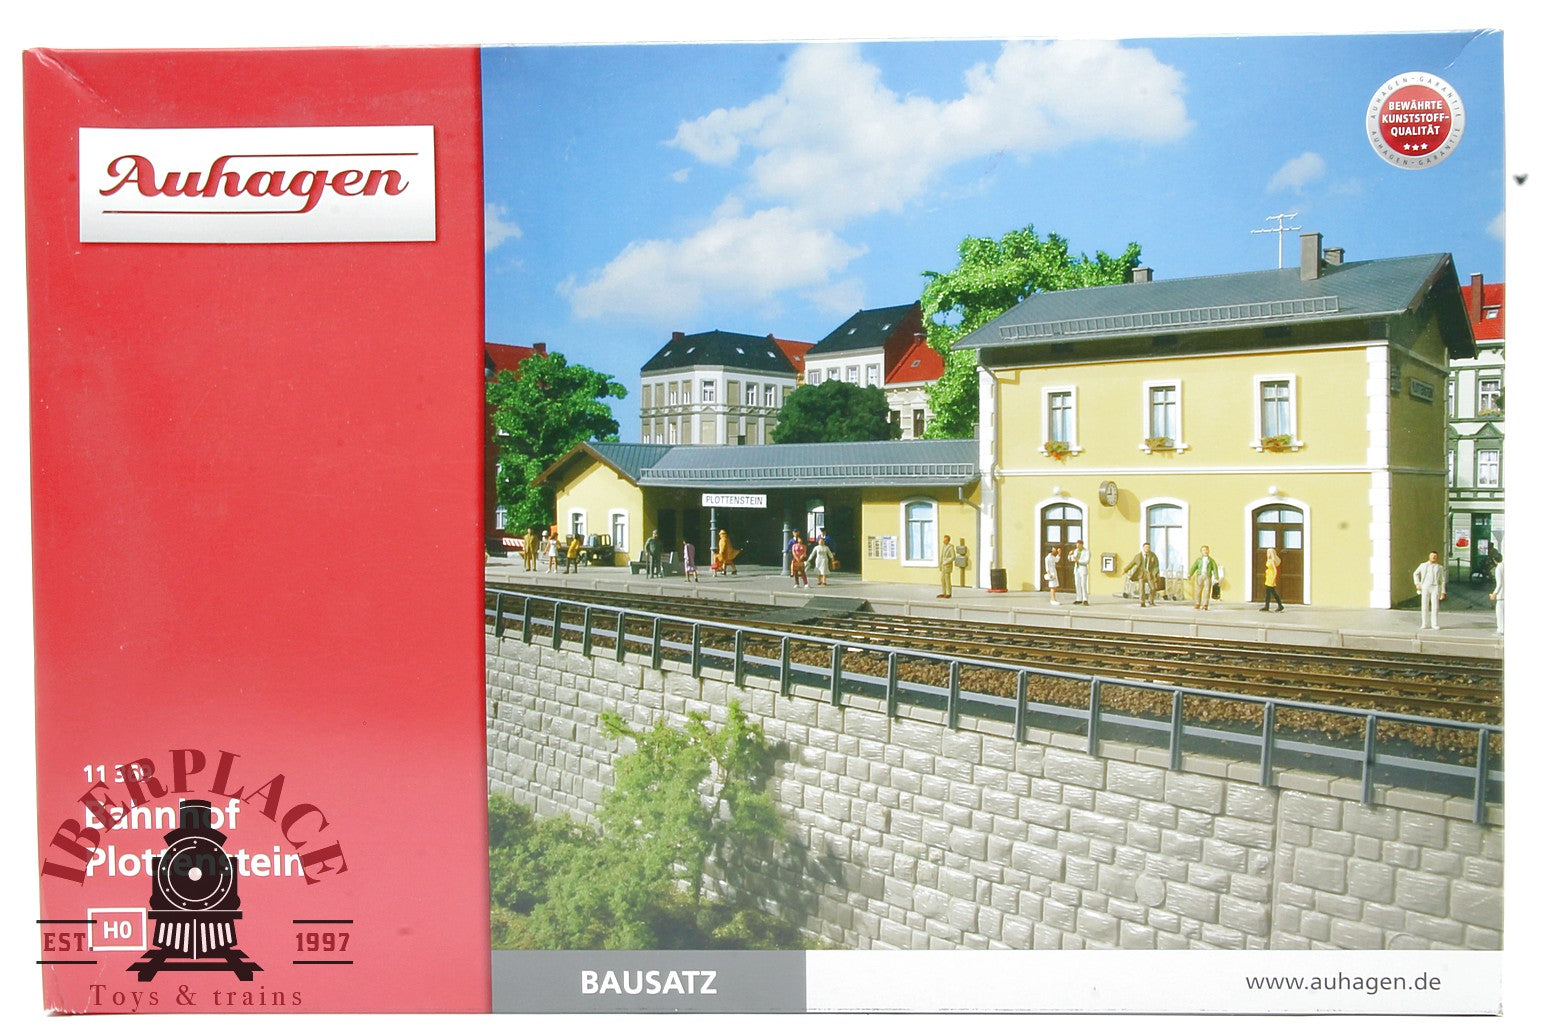 H0 1:87 escala trenes Auhagen 11 369 estación PLOTTENSTEIN 420 180 130 mm